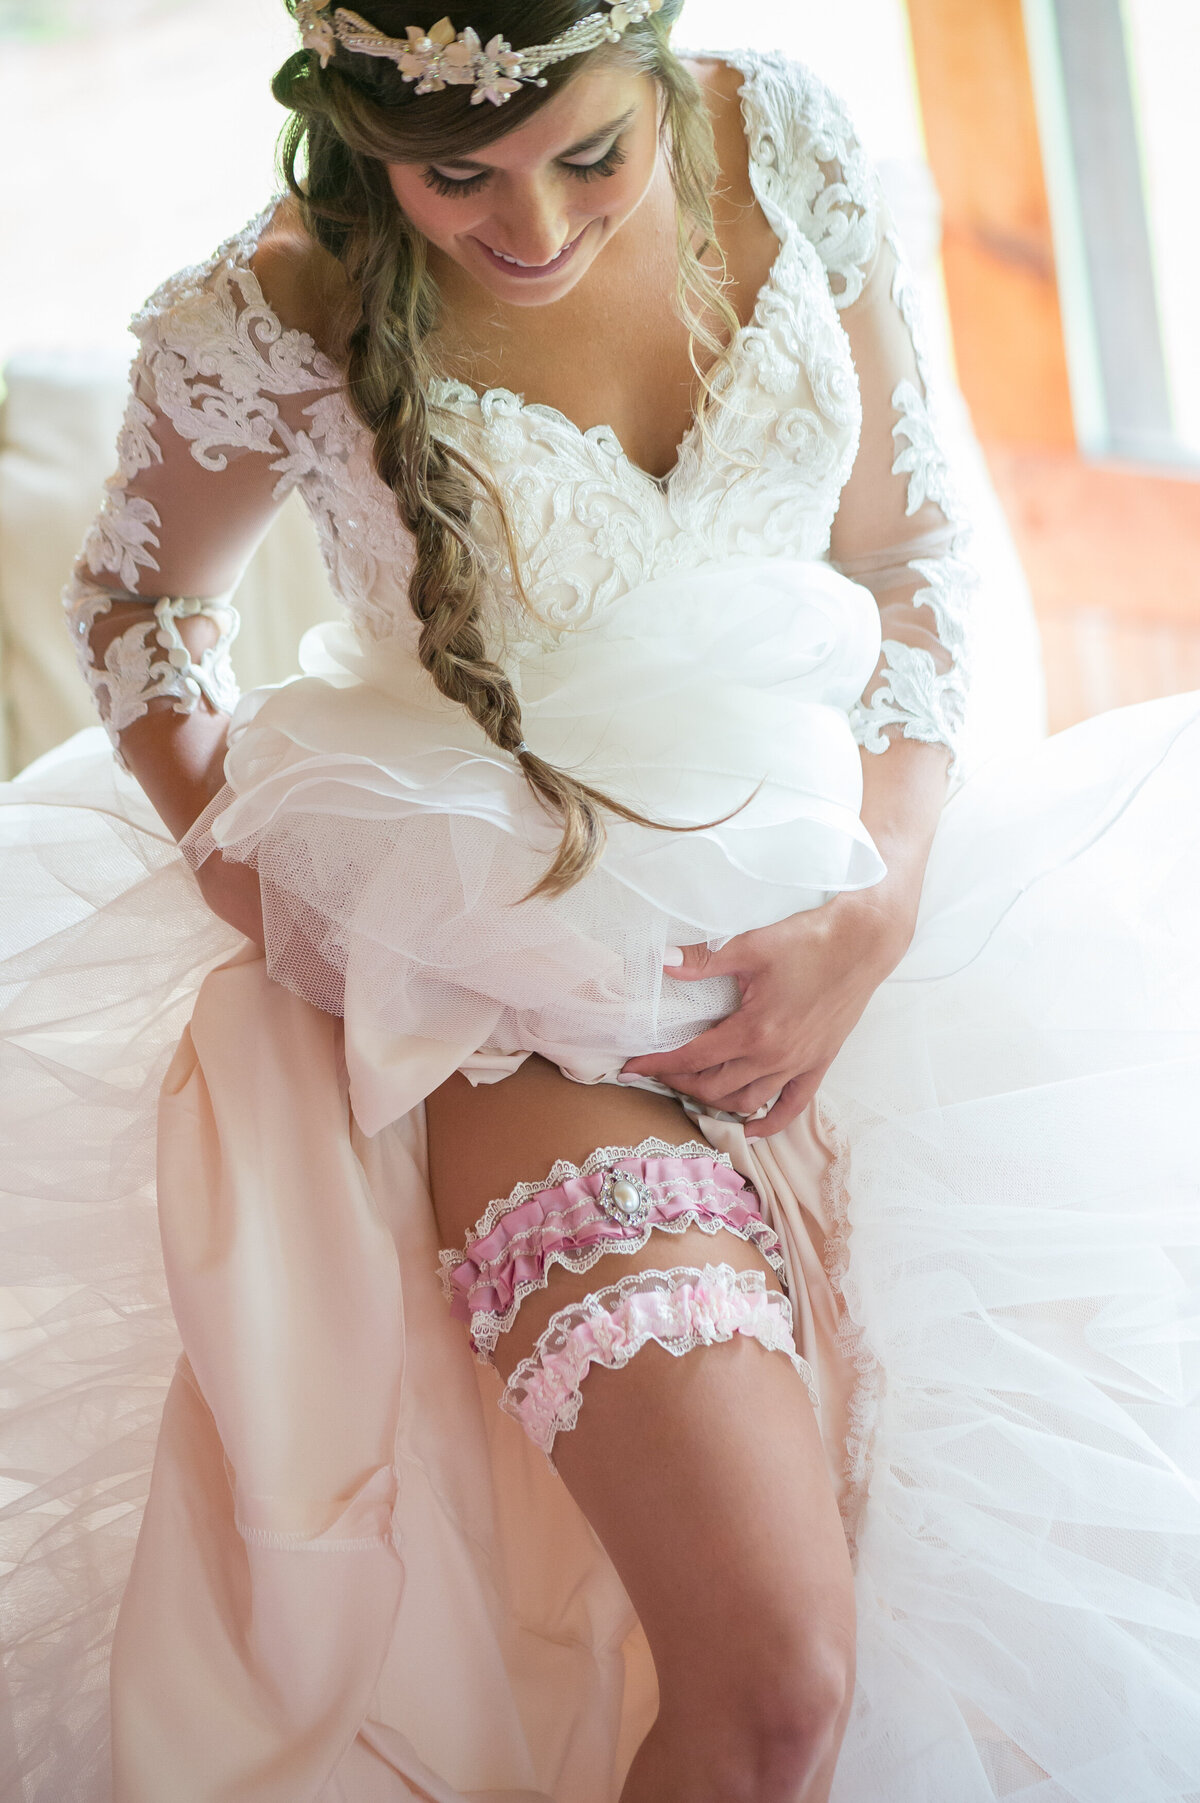 Bride showing garter on her leg.